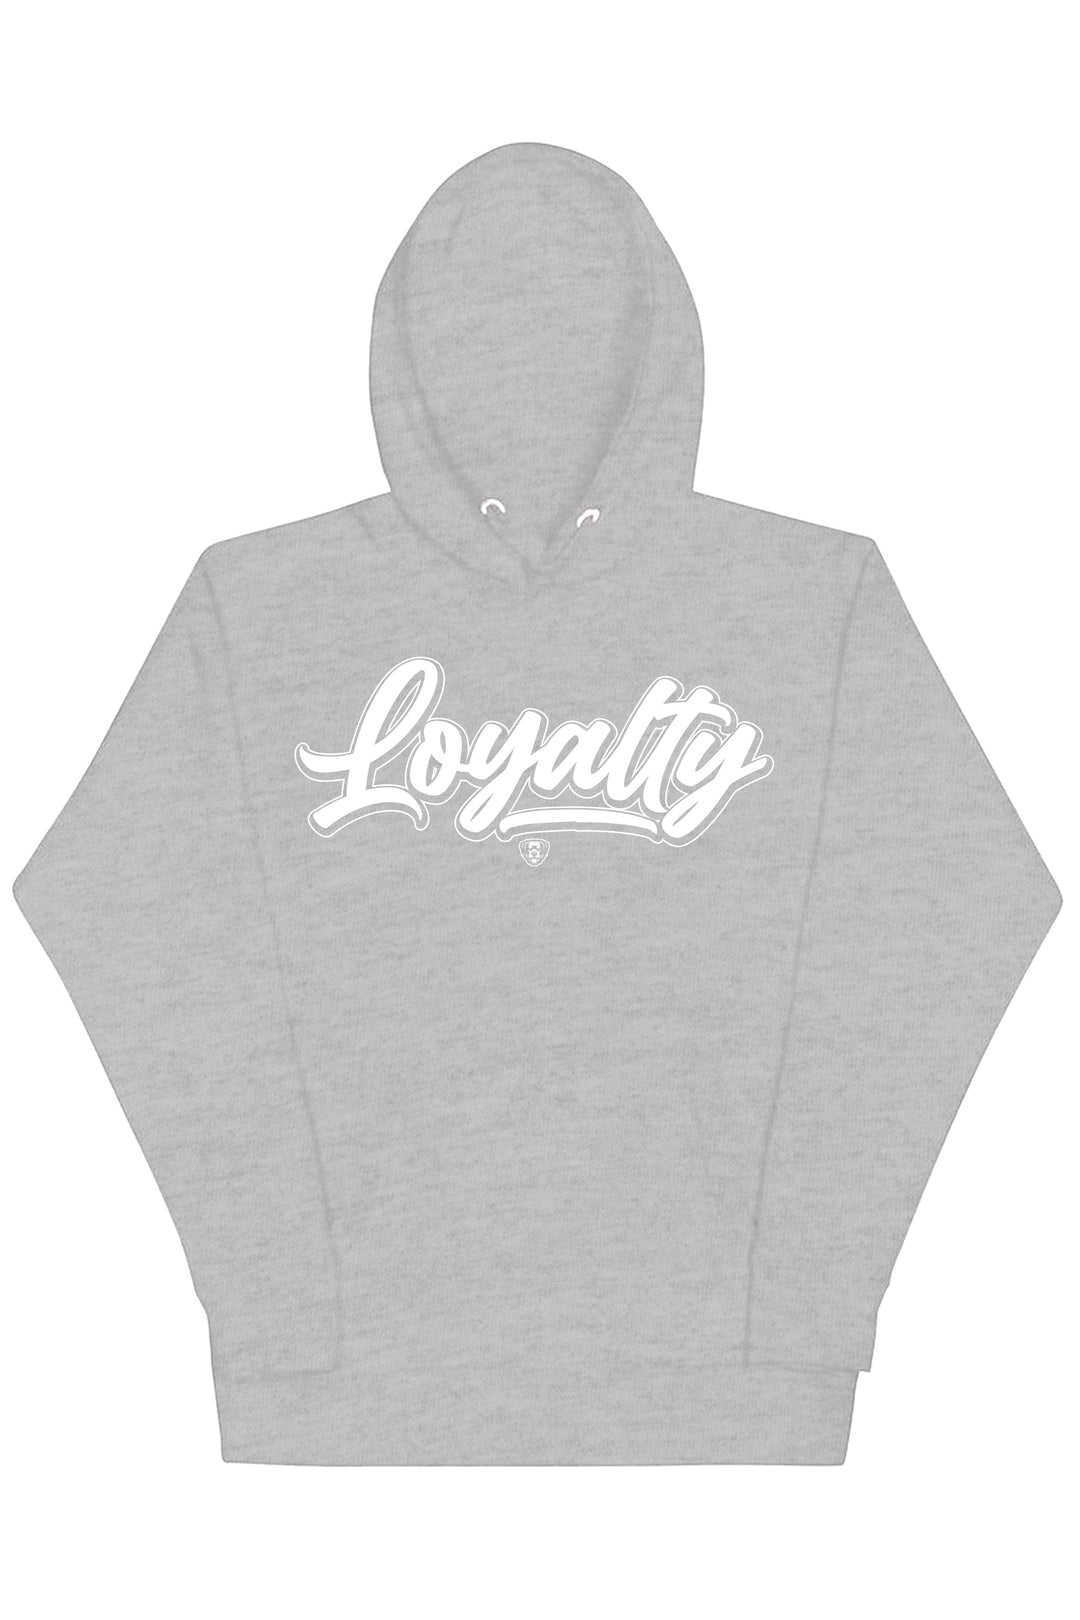 Loyalty Hoodie (White Logo) - Zamage